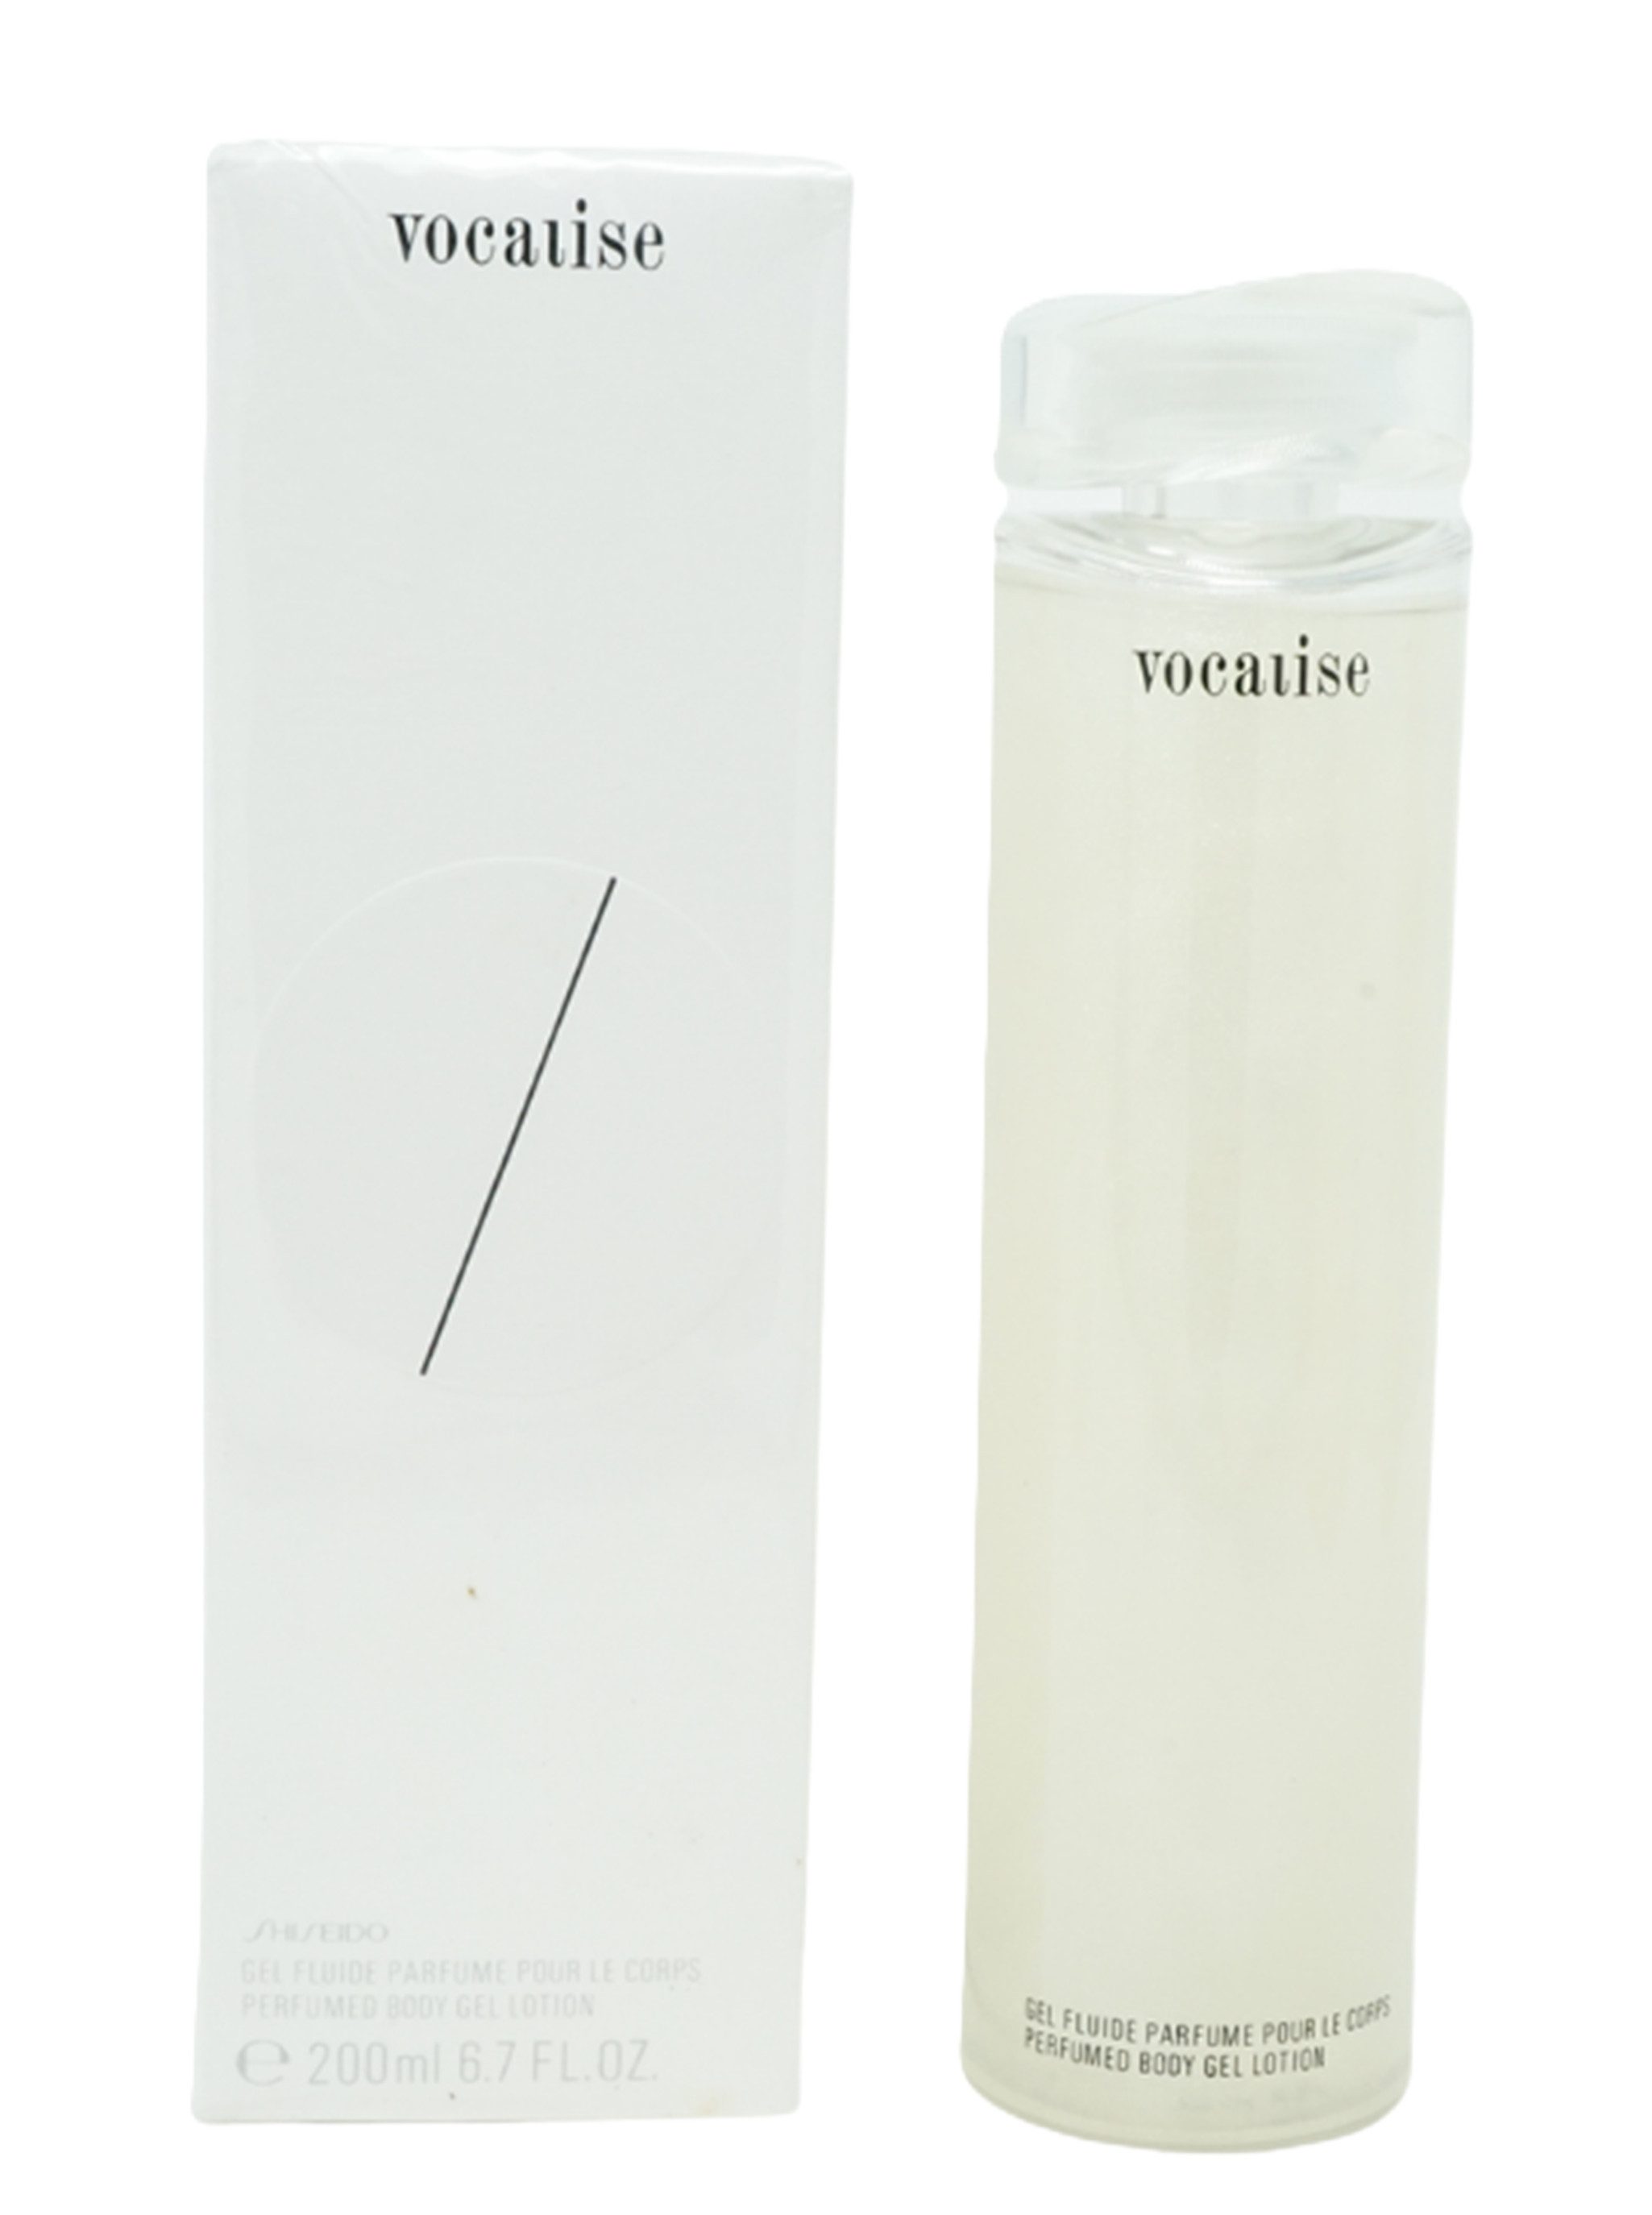 SHISEIDO Körperpflegeduft Shiseido Vocaise Perfumed Body Gel Lotion 200 ml